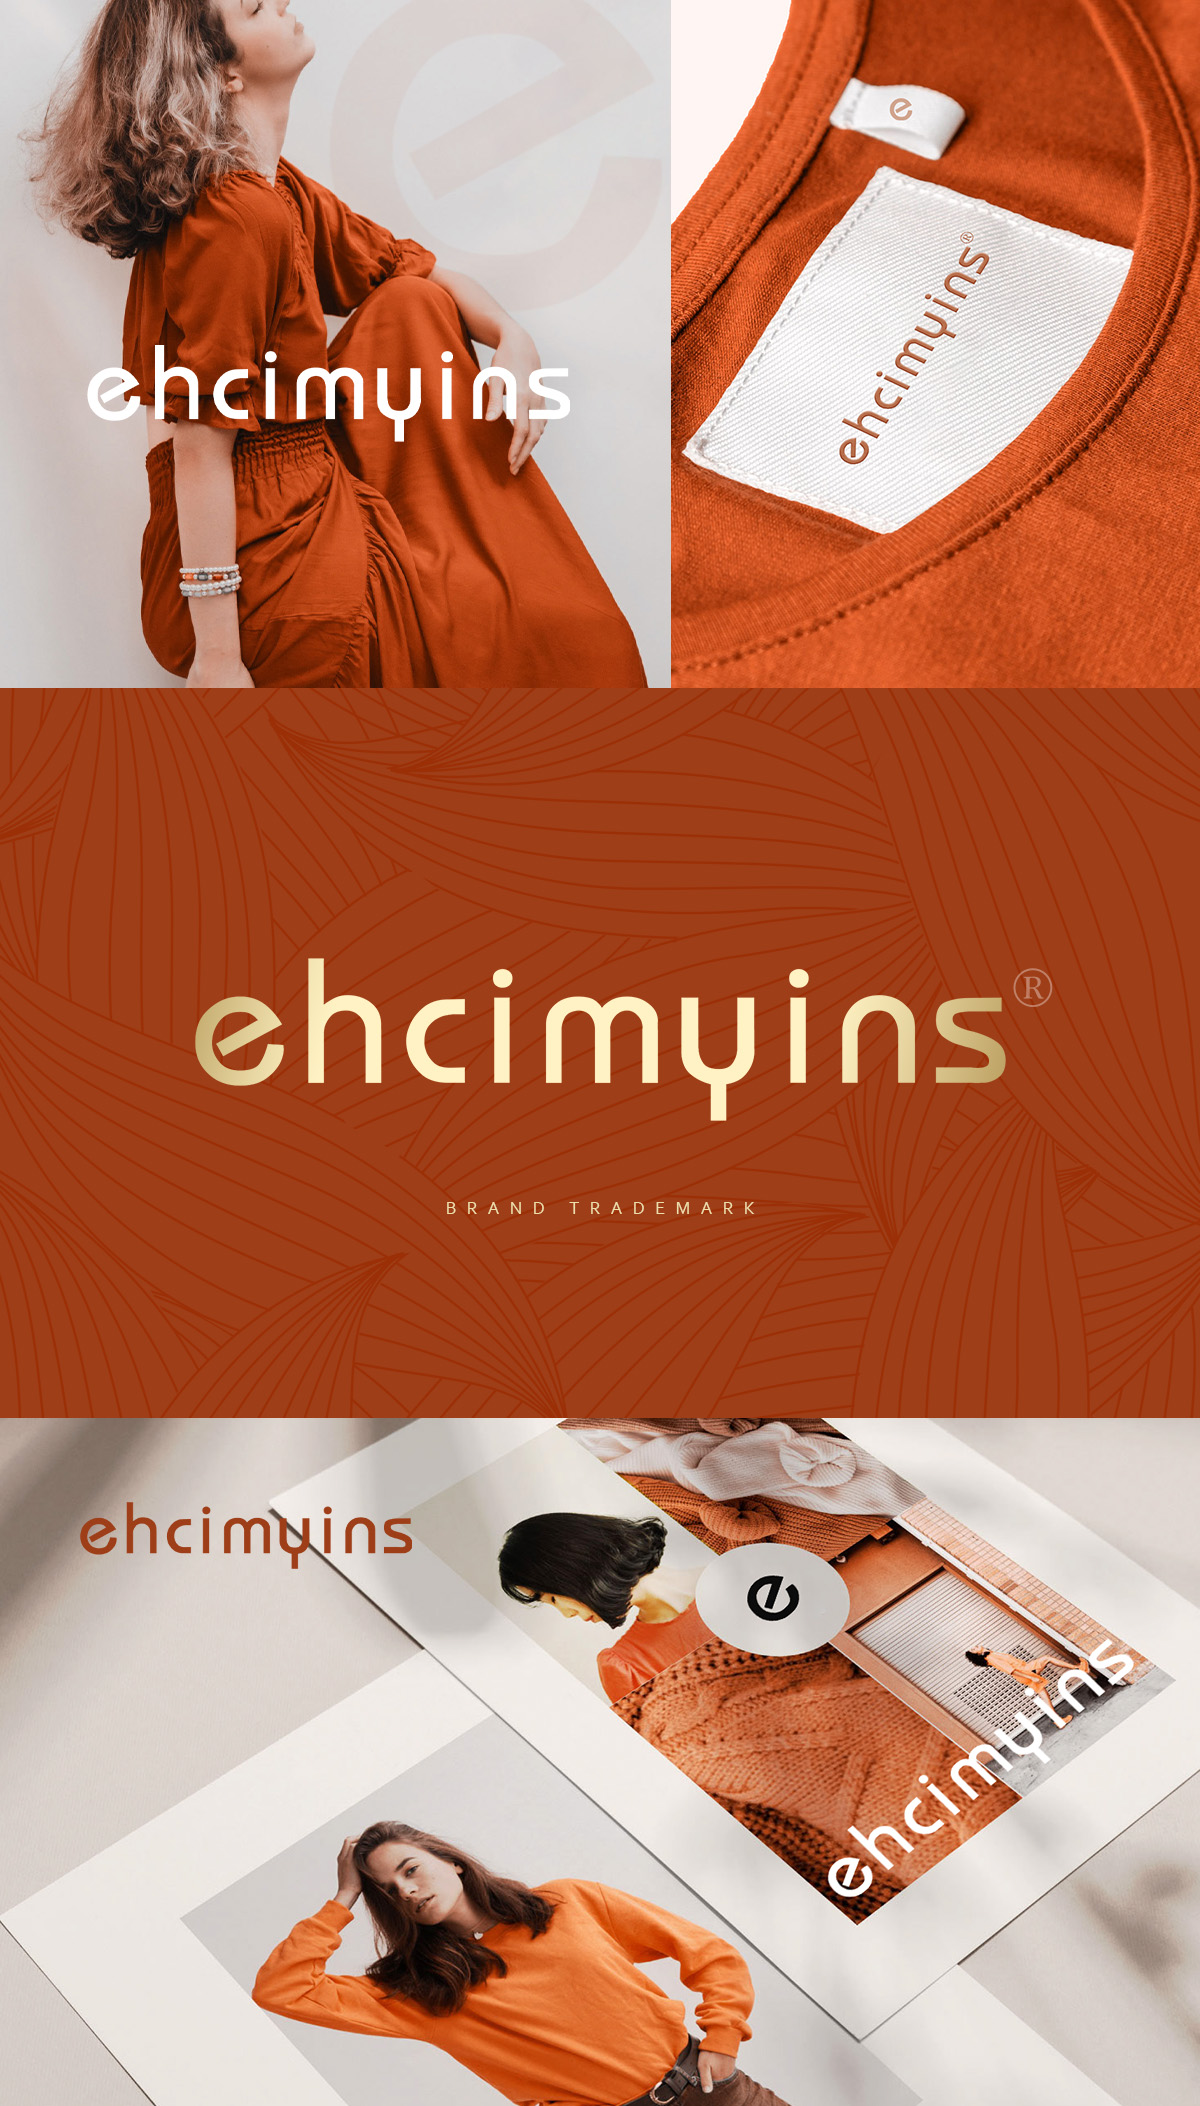 EHCIMYINS